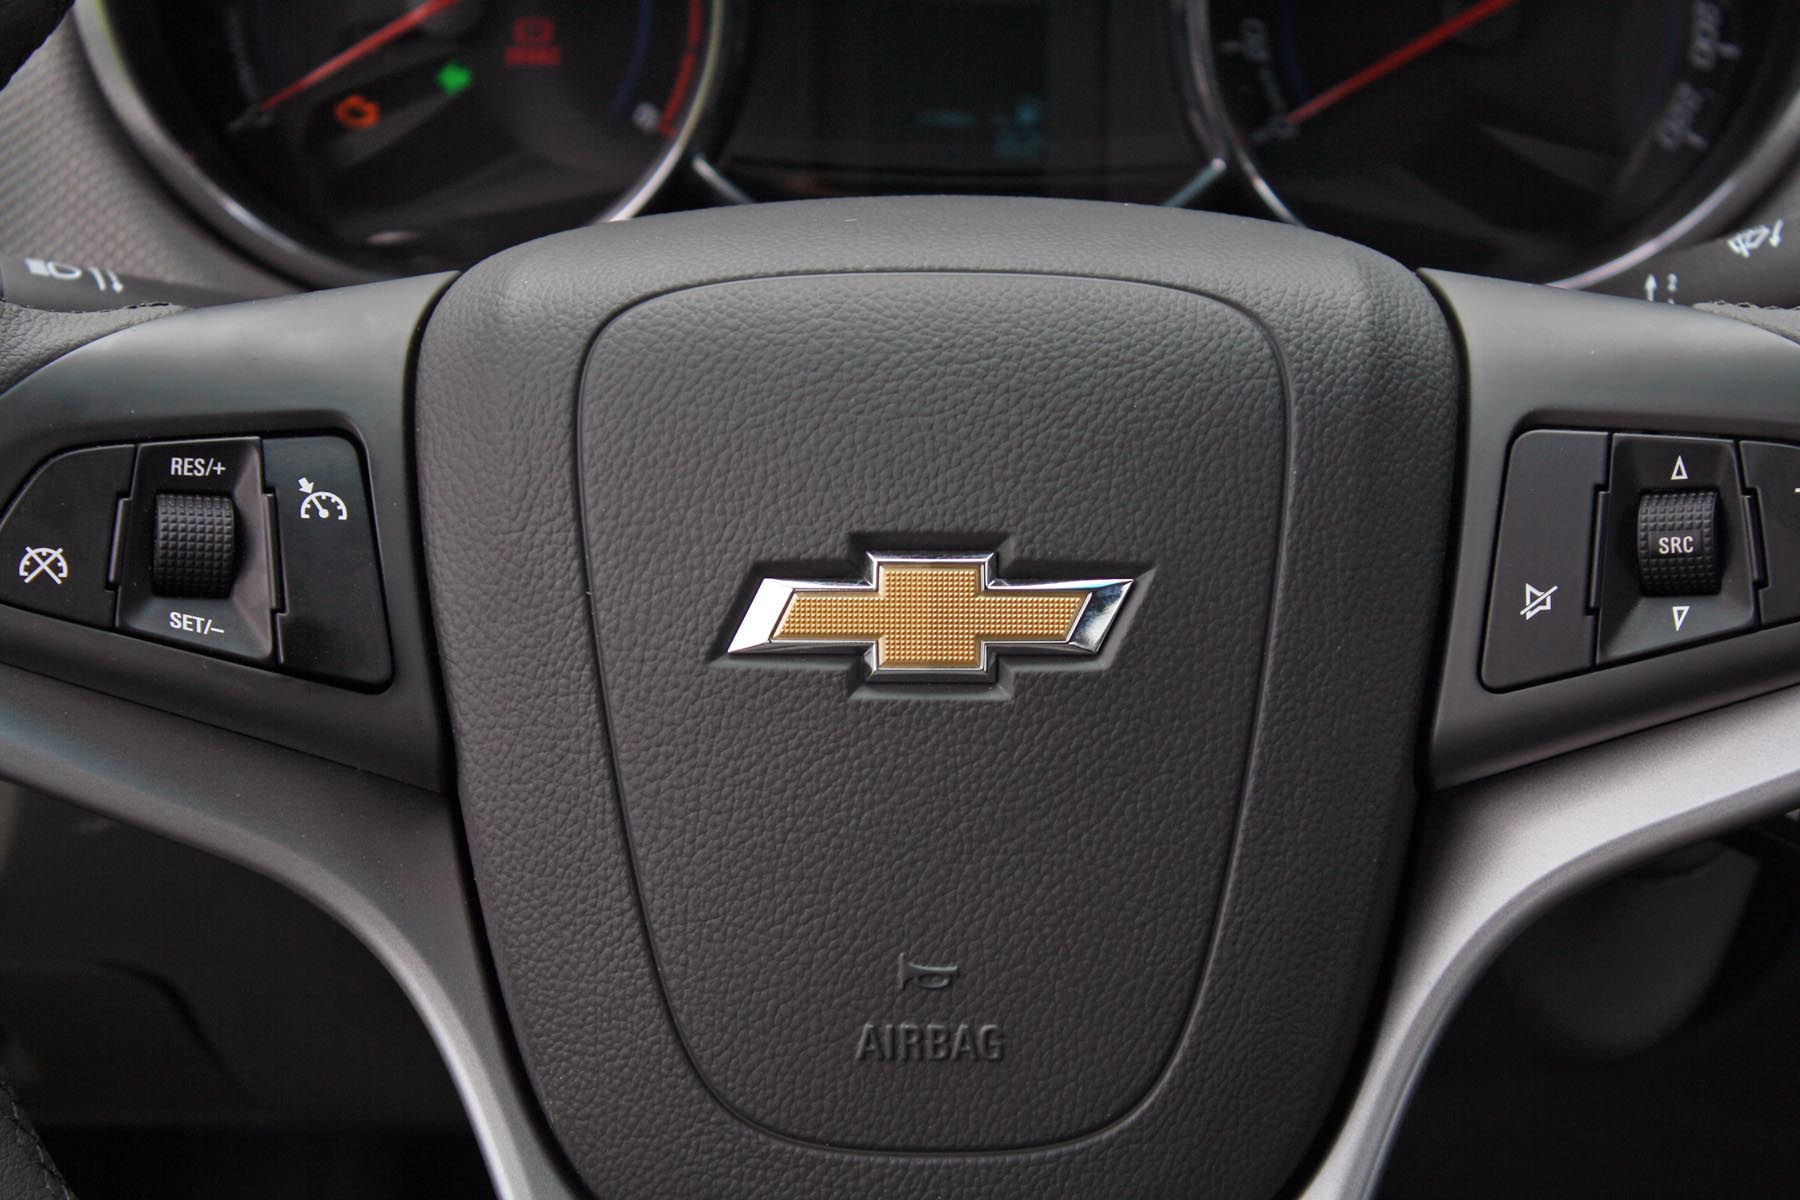 Chevrolet Cruze face un mare pas inainte in ce priveste interiorul